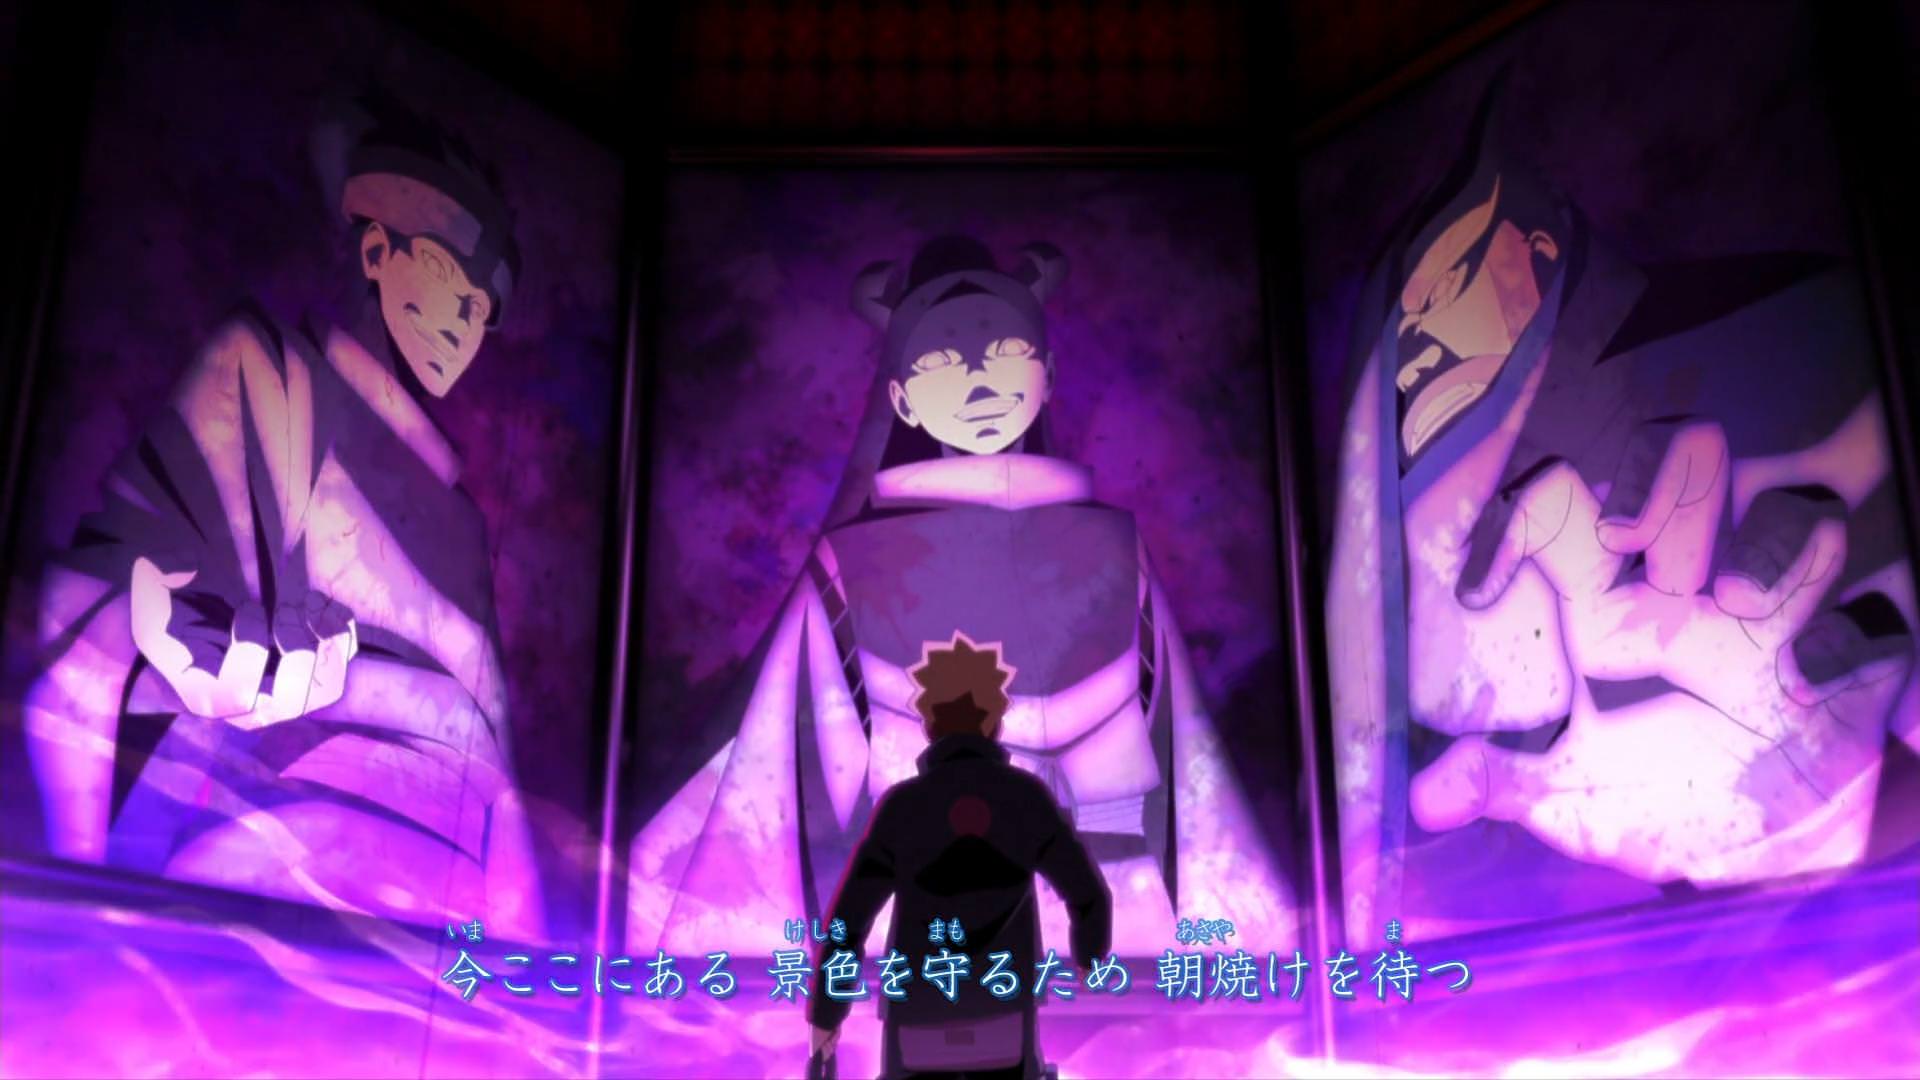 Boruto: Naruto Next Generations: Part 1 - Urashiki Returns (2019) -  (S1E123) - Backdrops — The Movie Database (TMDB)